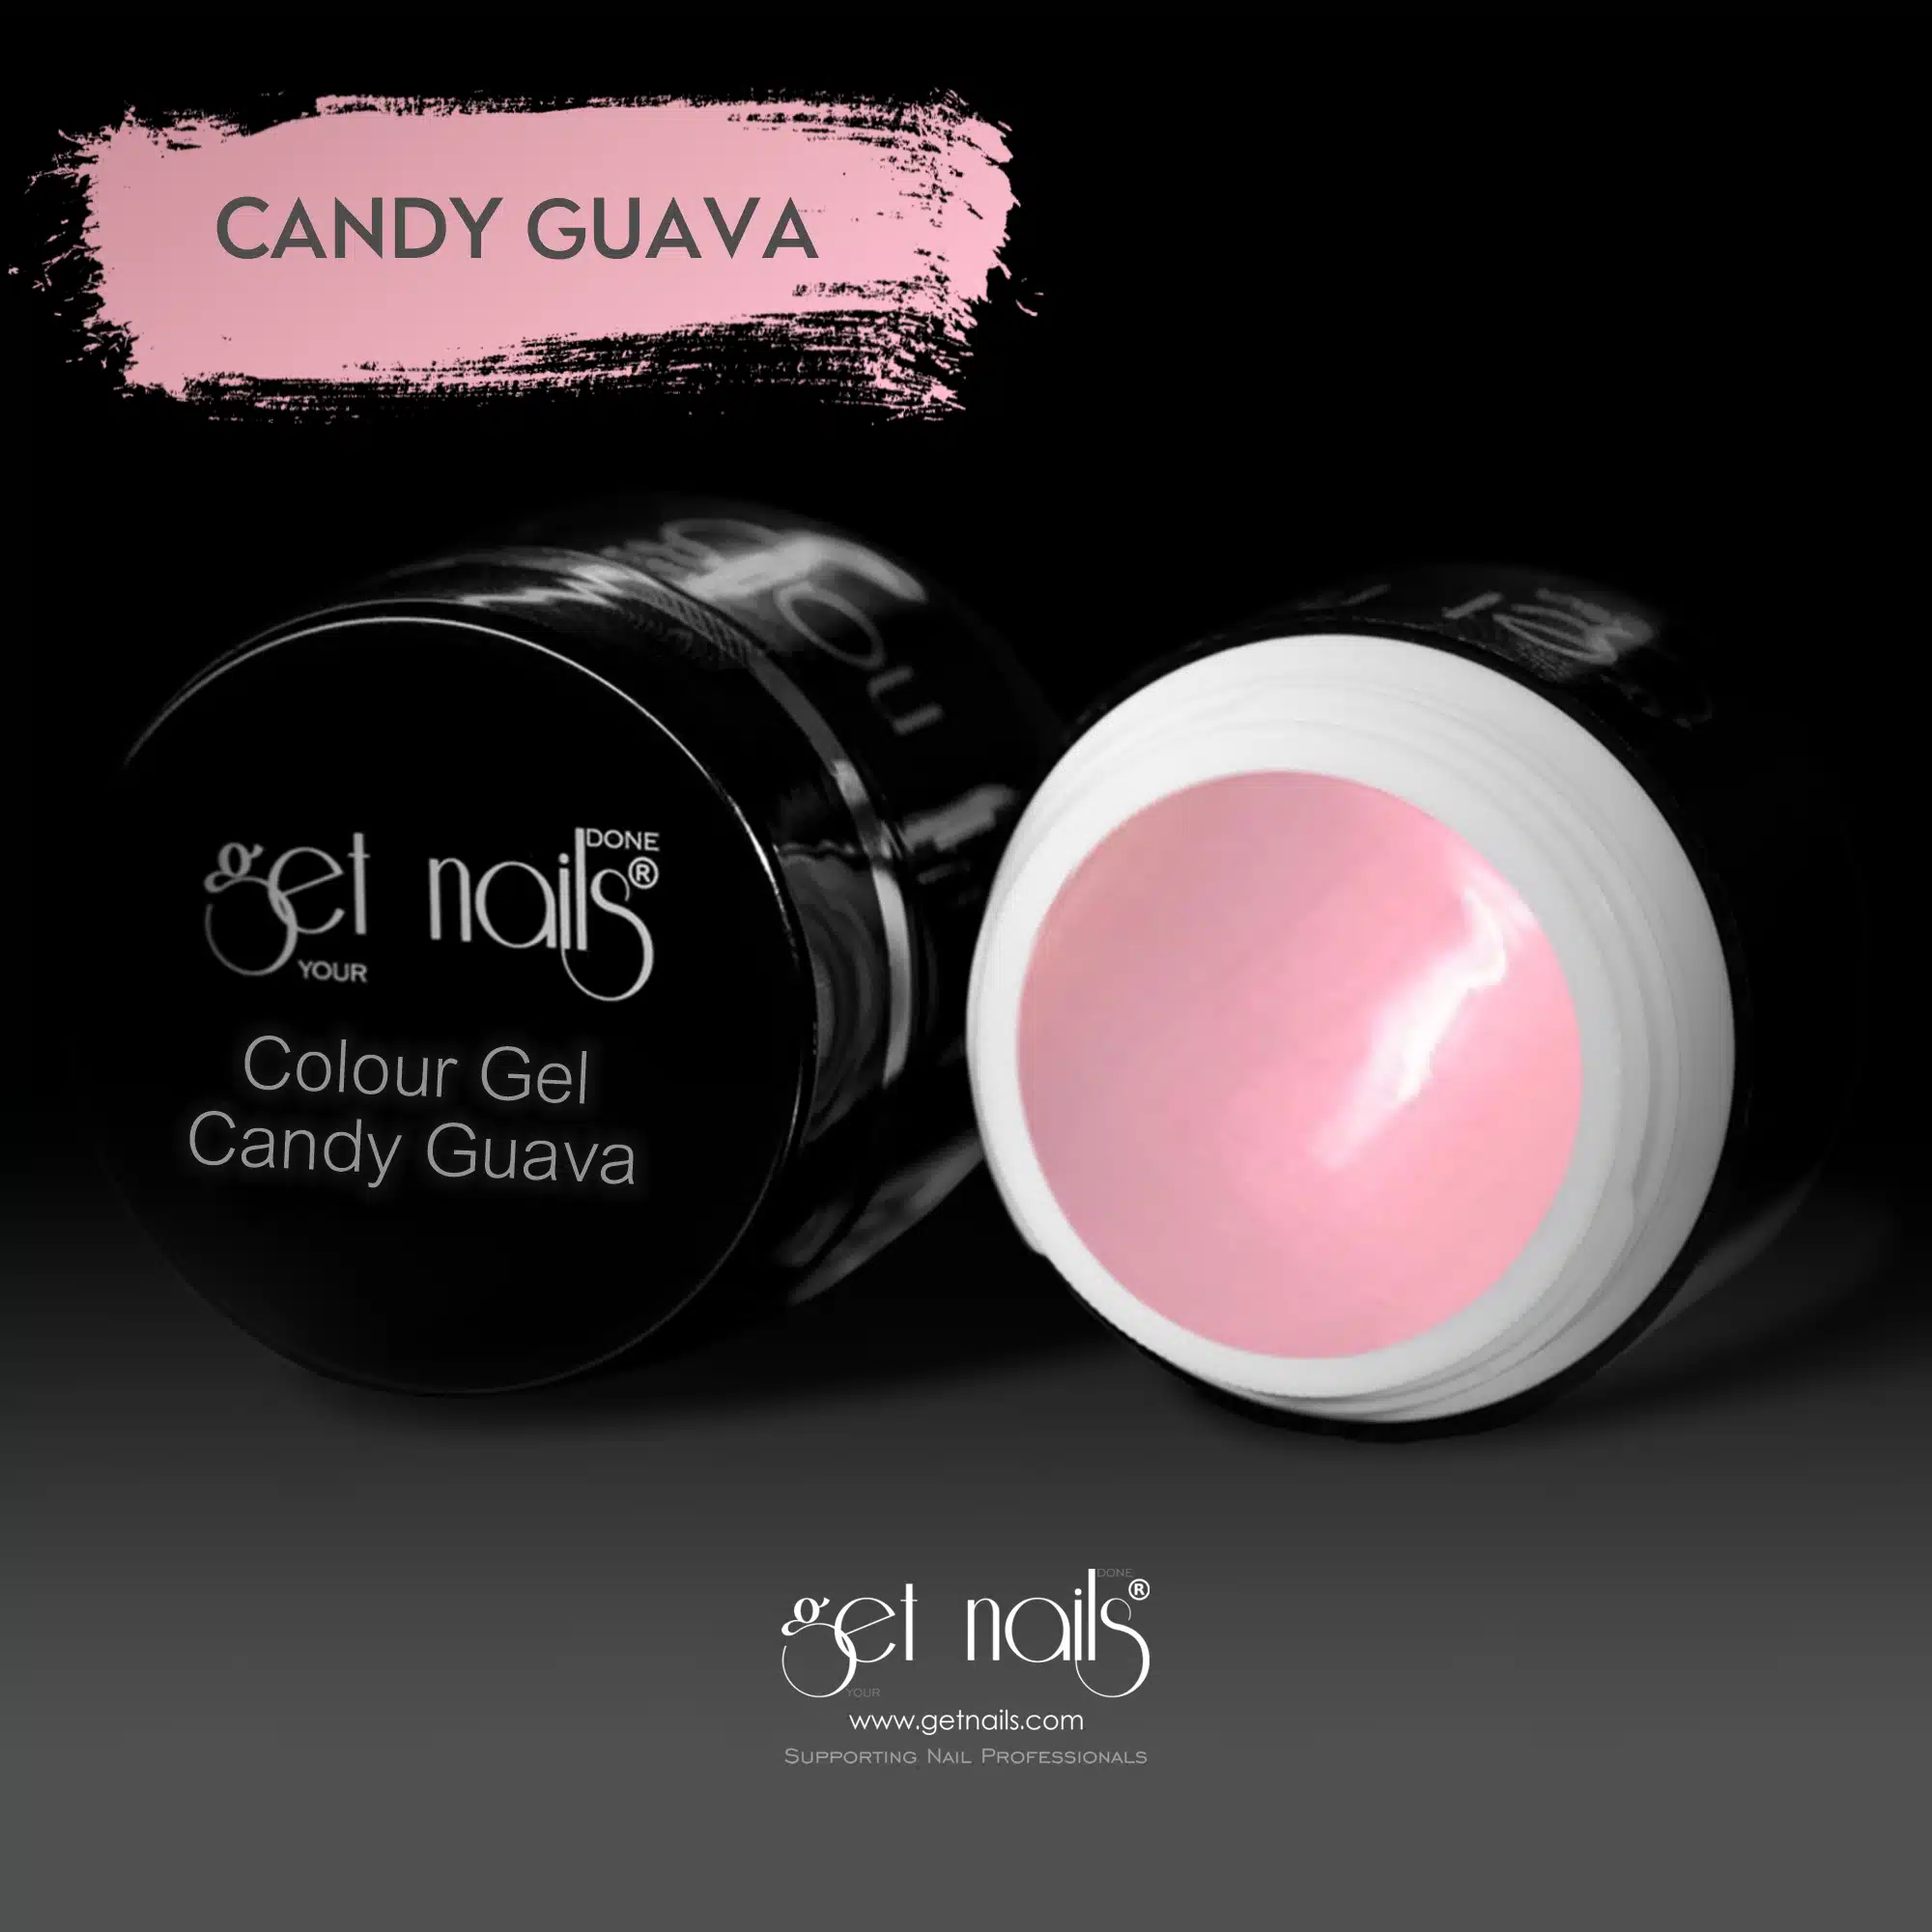 Get Nails Austria - Color Gel Candy Guava 5g